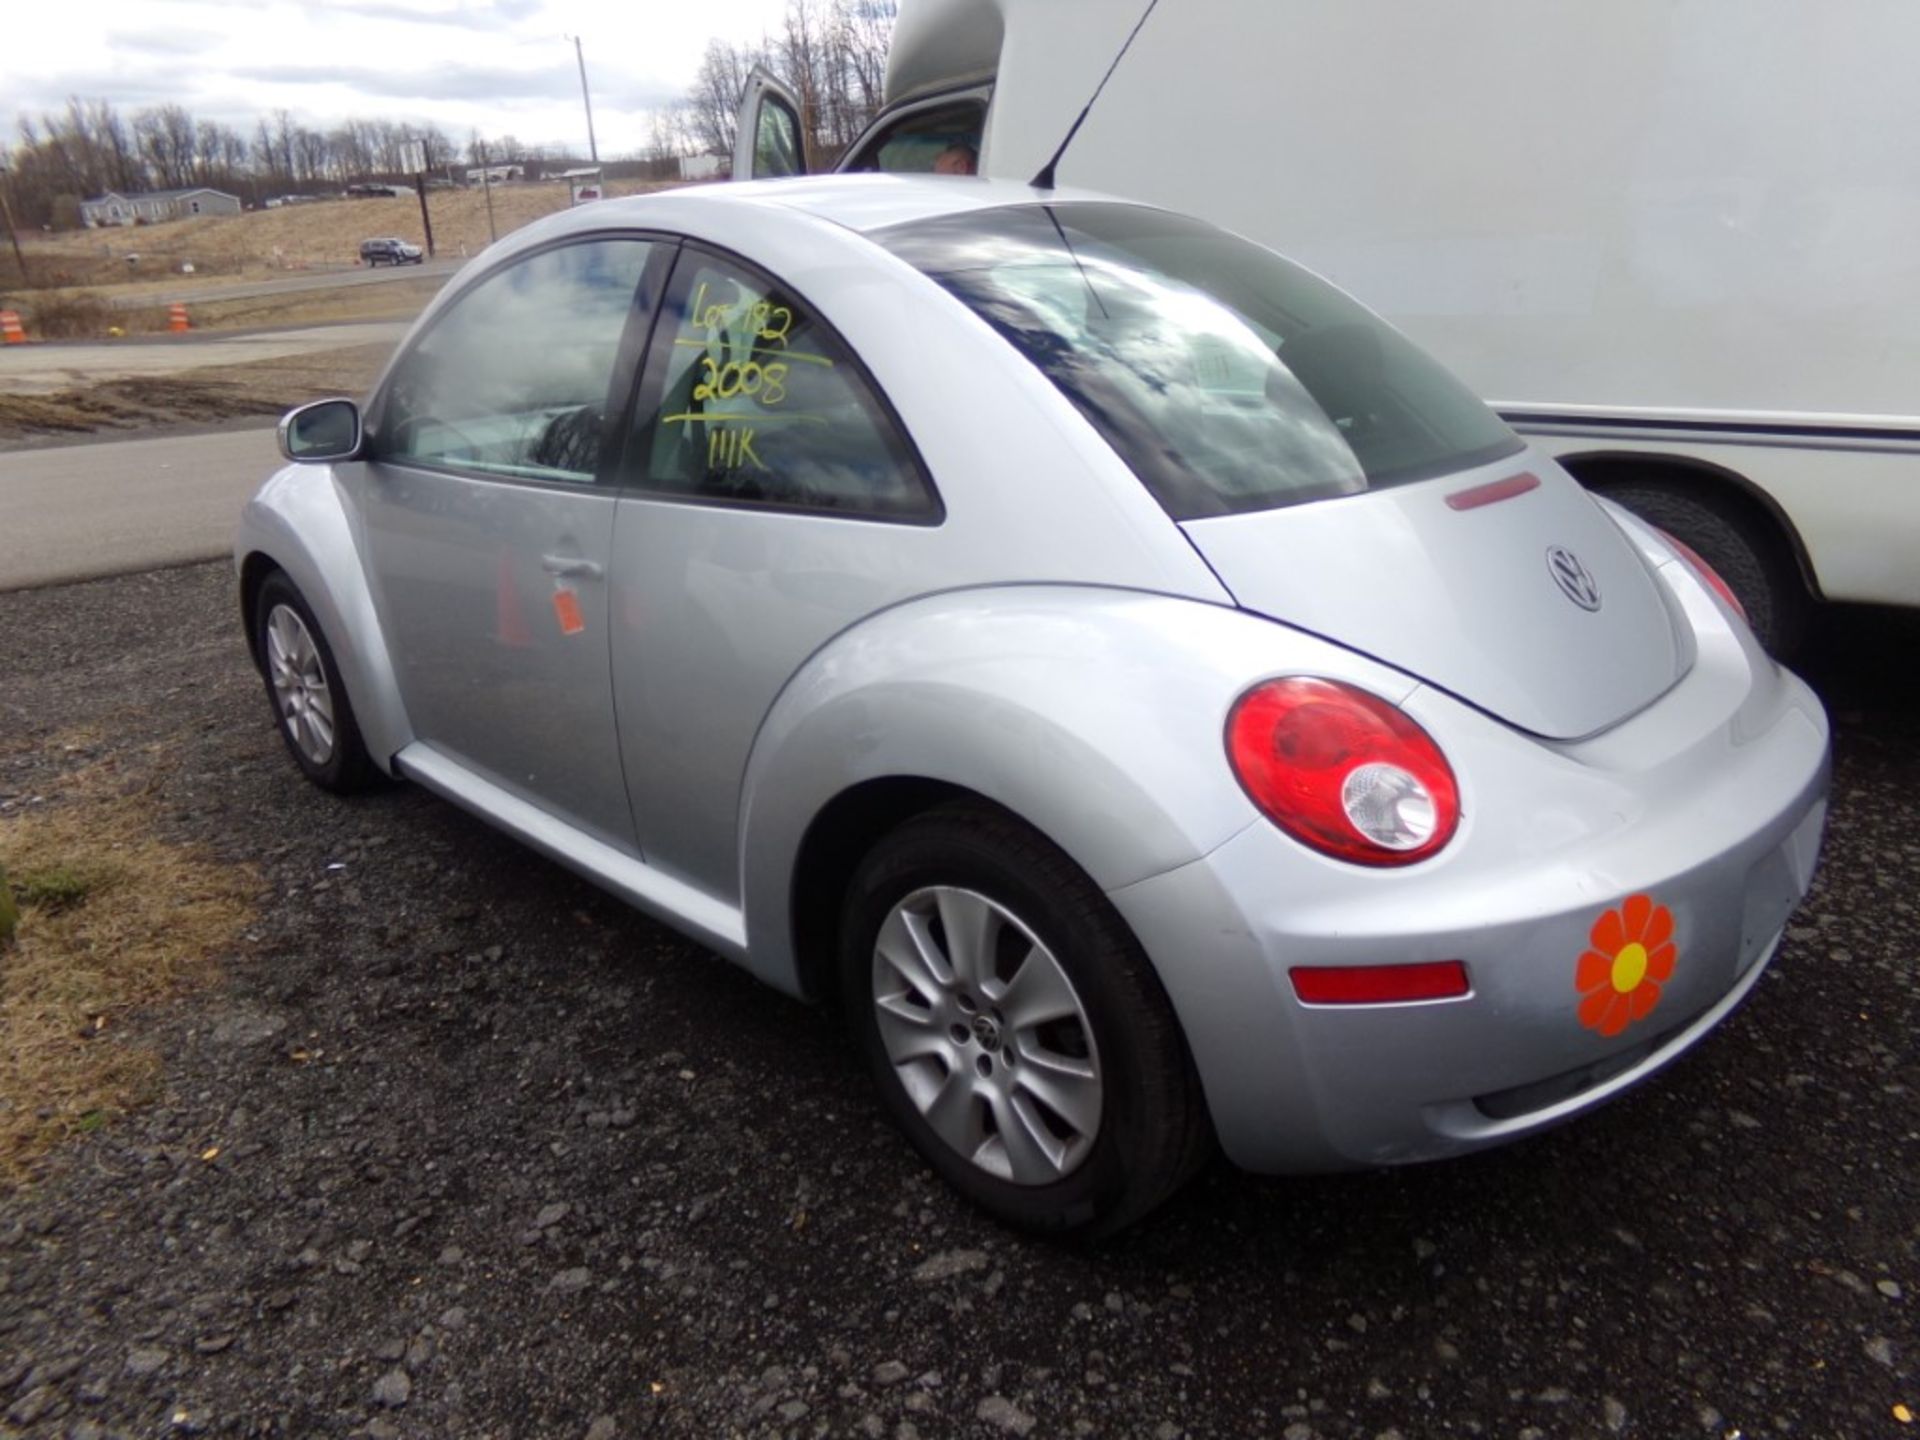 2008 Volkswagen Beetle Coupe SE, Silver, 111,578 Mi., Leather, Sunroof, Vin # 3VWRG31C08M501604, - Image 2 of 13